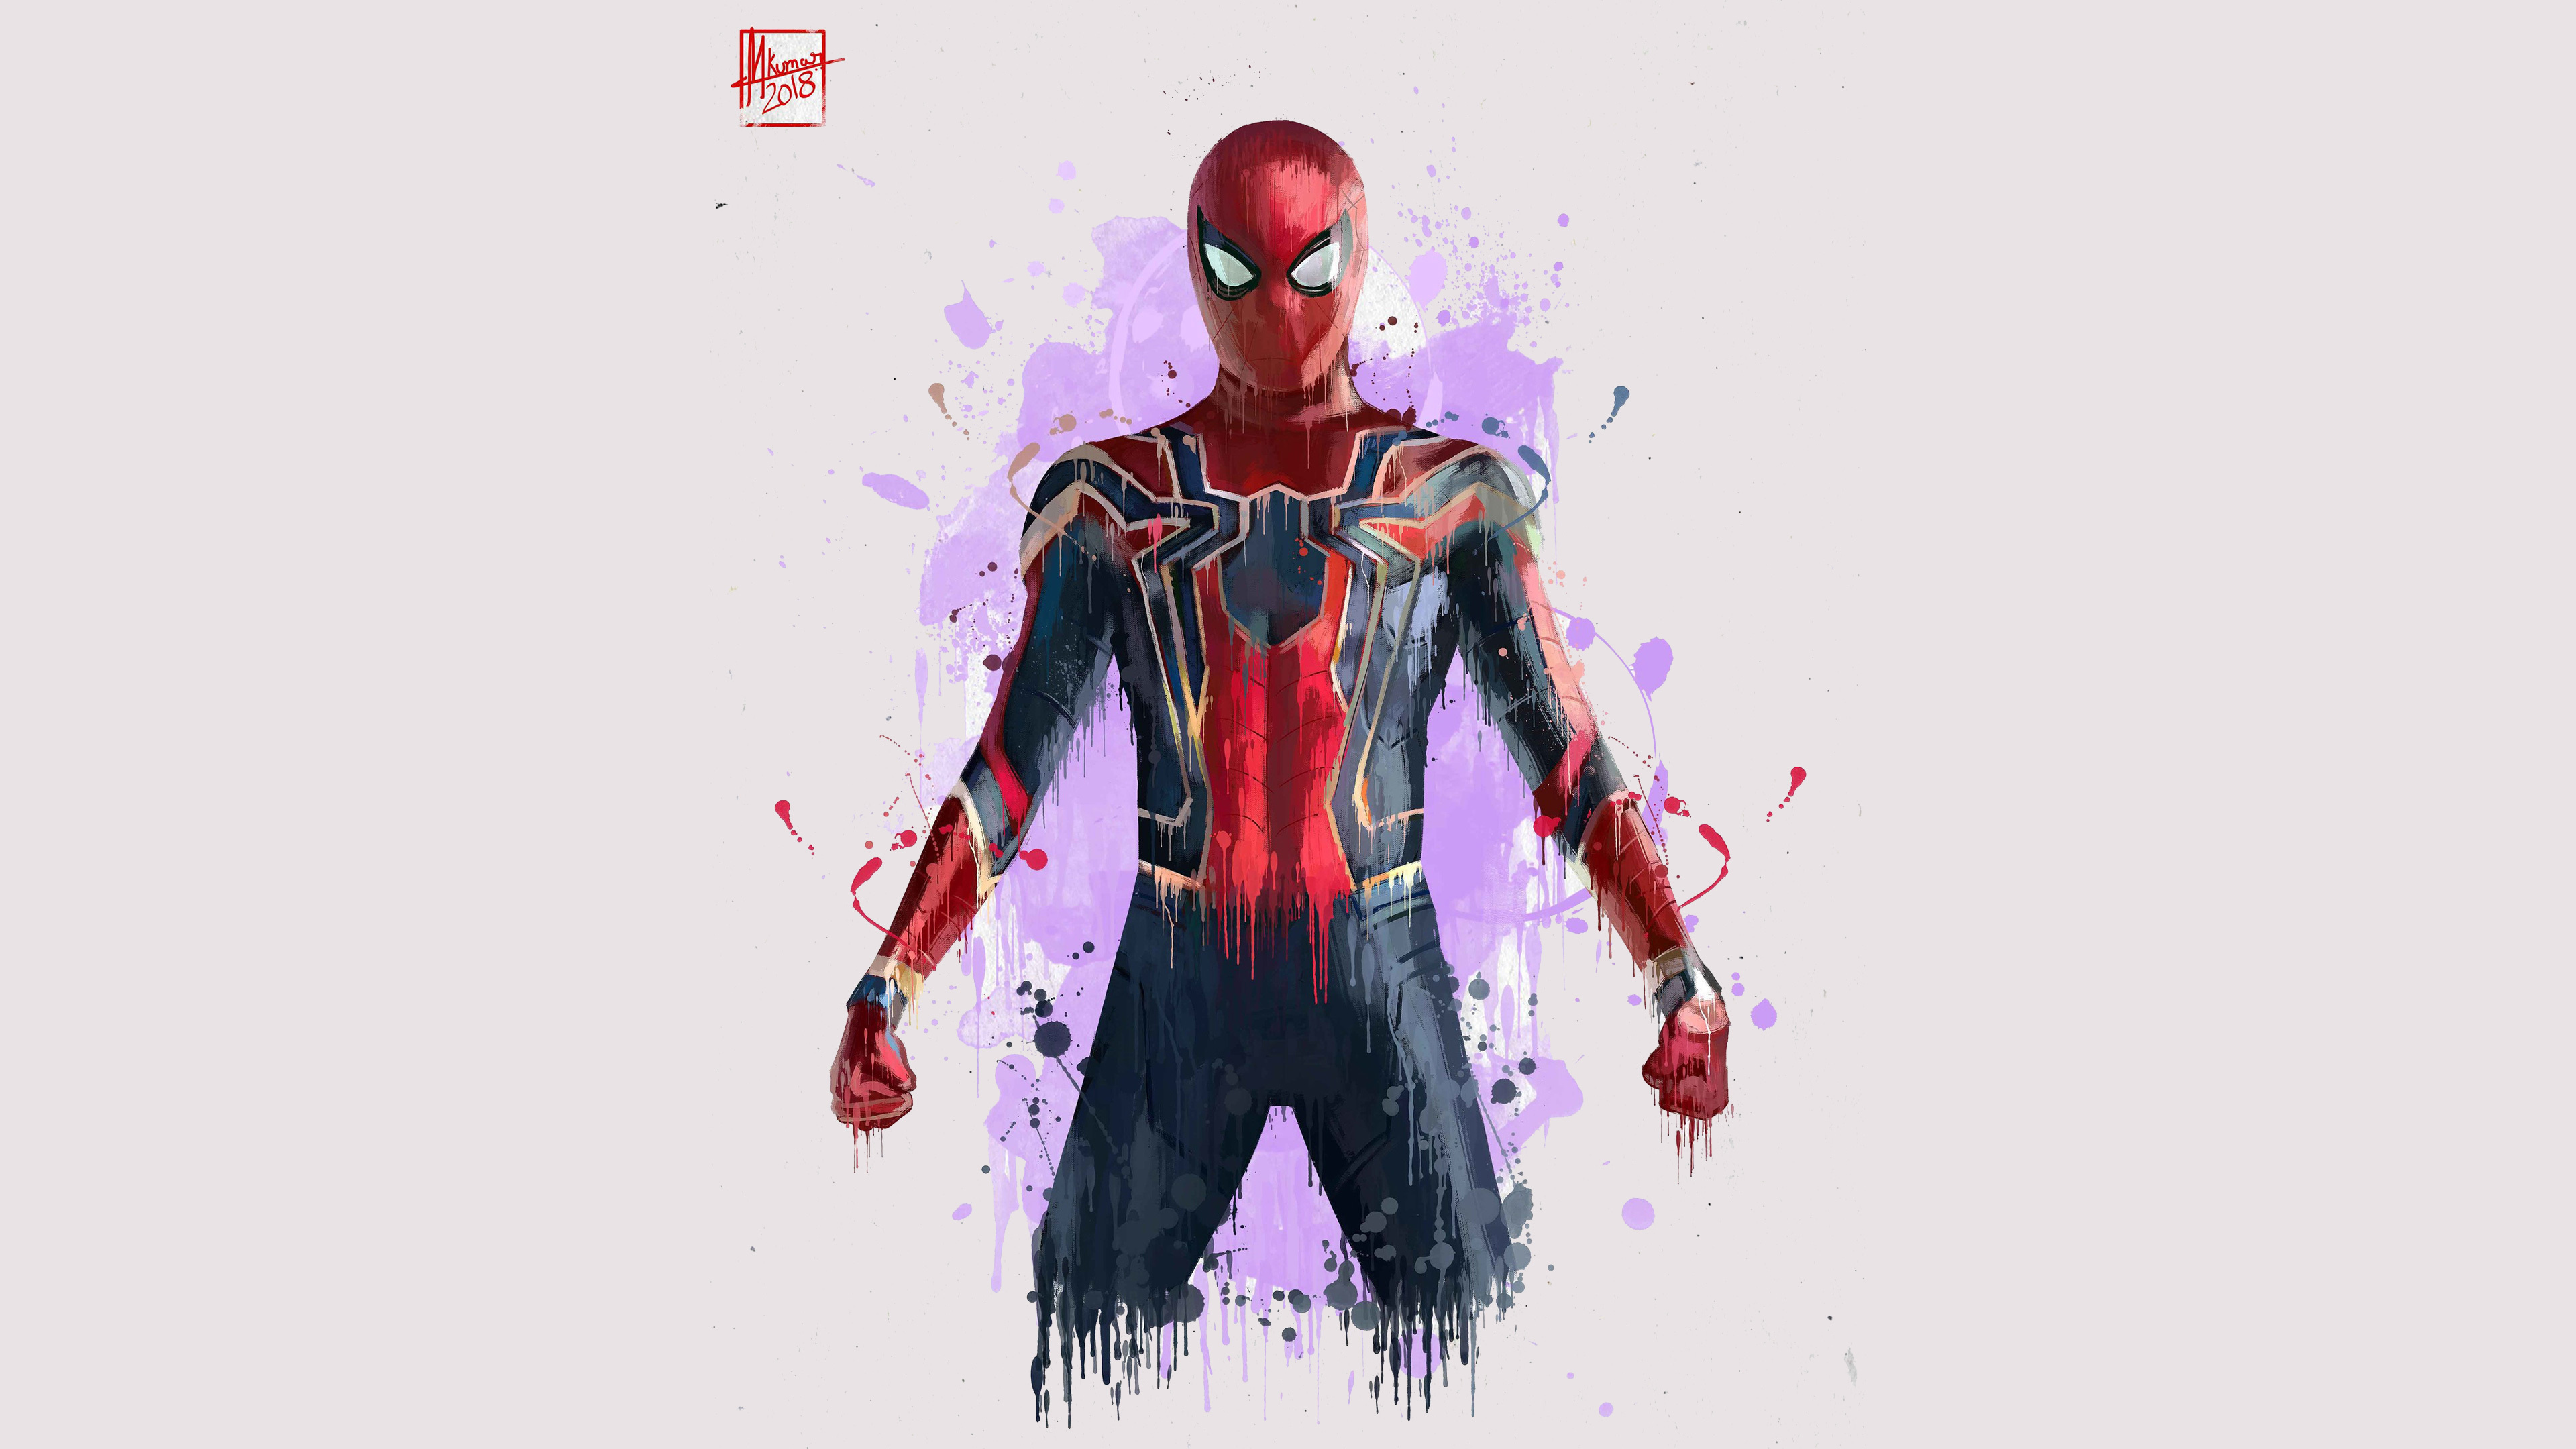 Download 3840x2160 wallpaper spiderman, minimal, avengers: infinity war, art, 4k, uhd 16: widescreen, 3840x2160 HD image, background, 4722